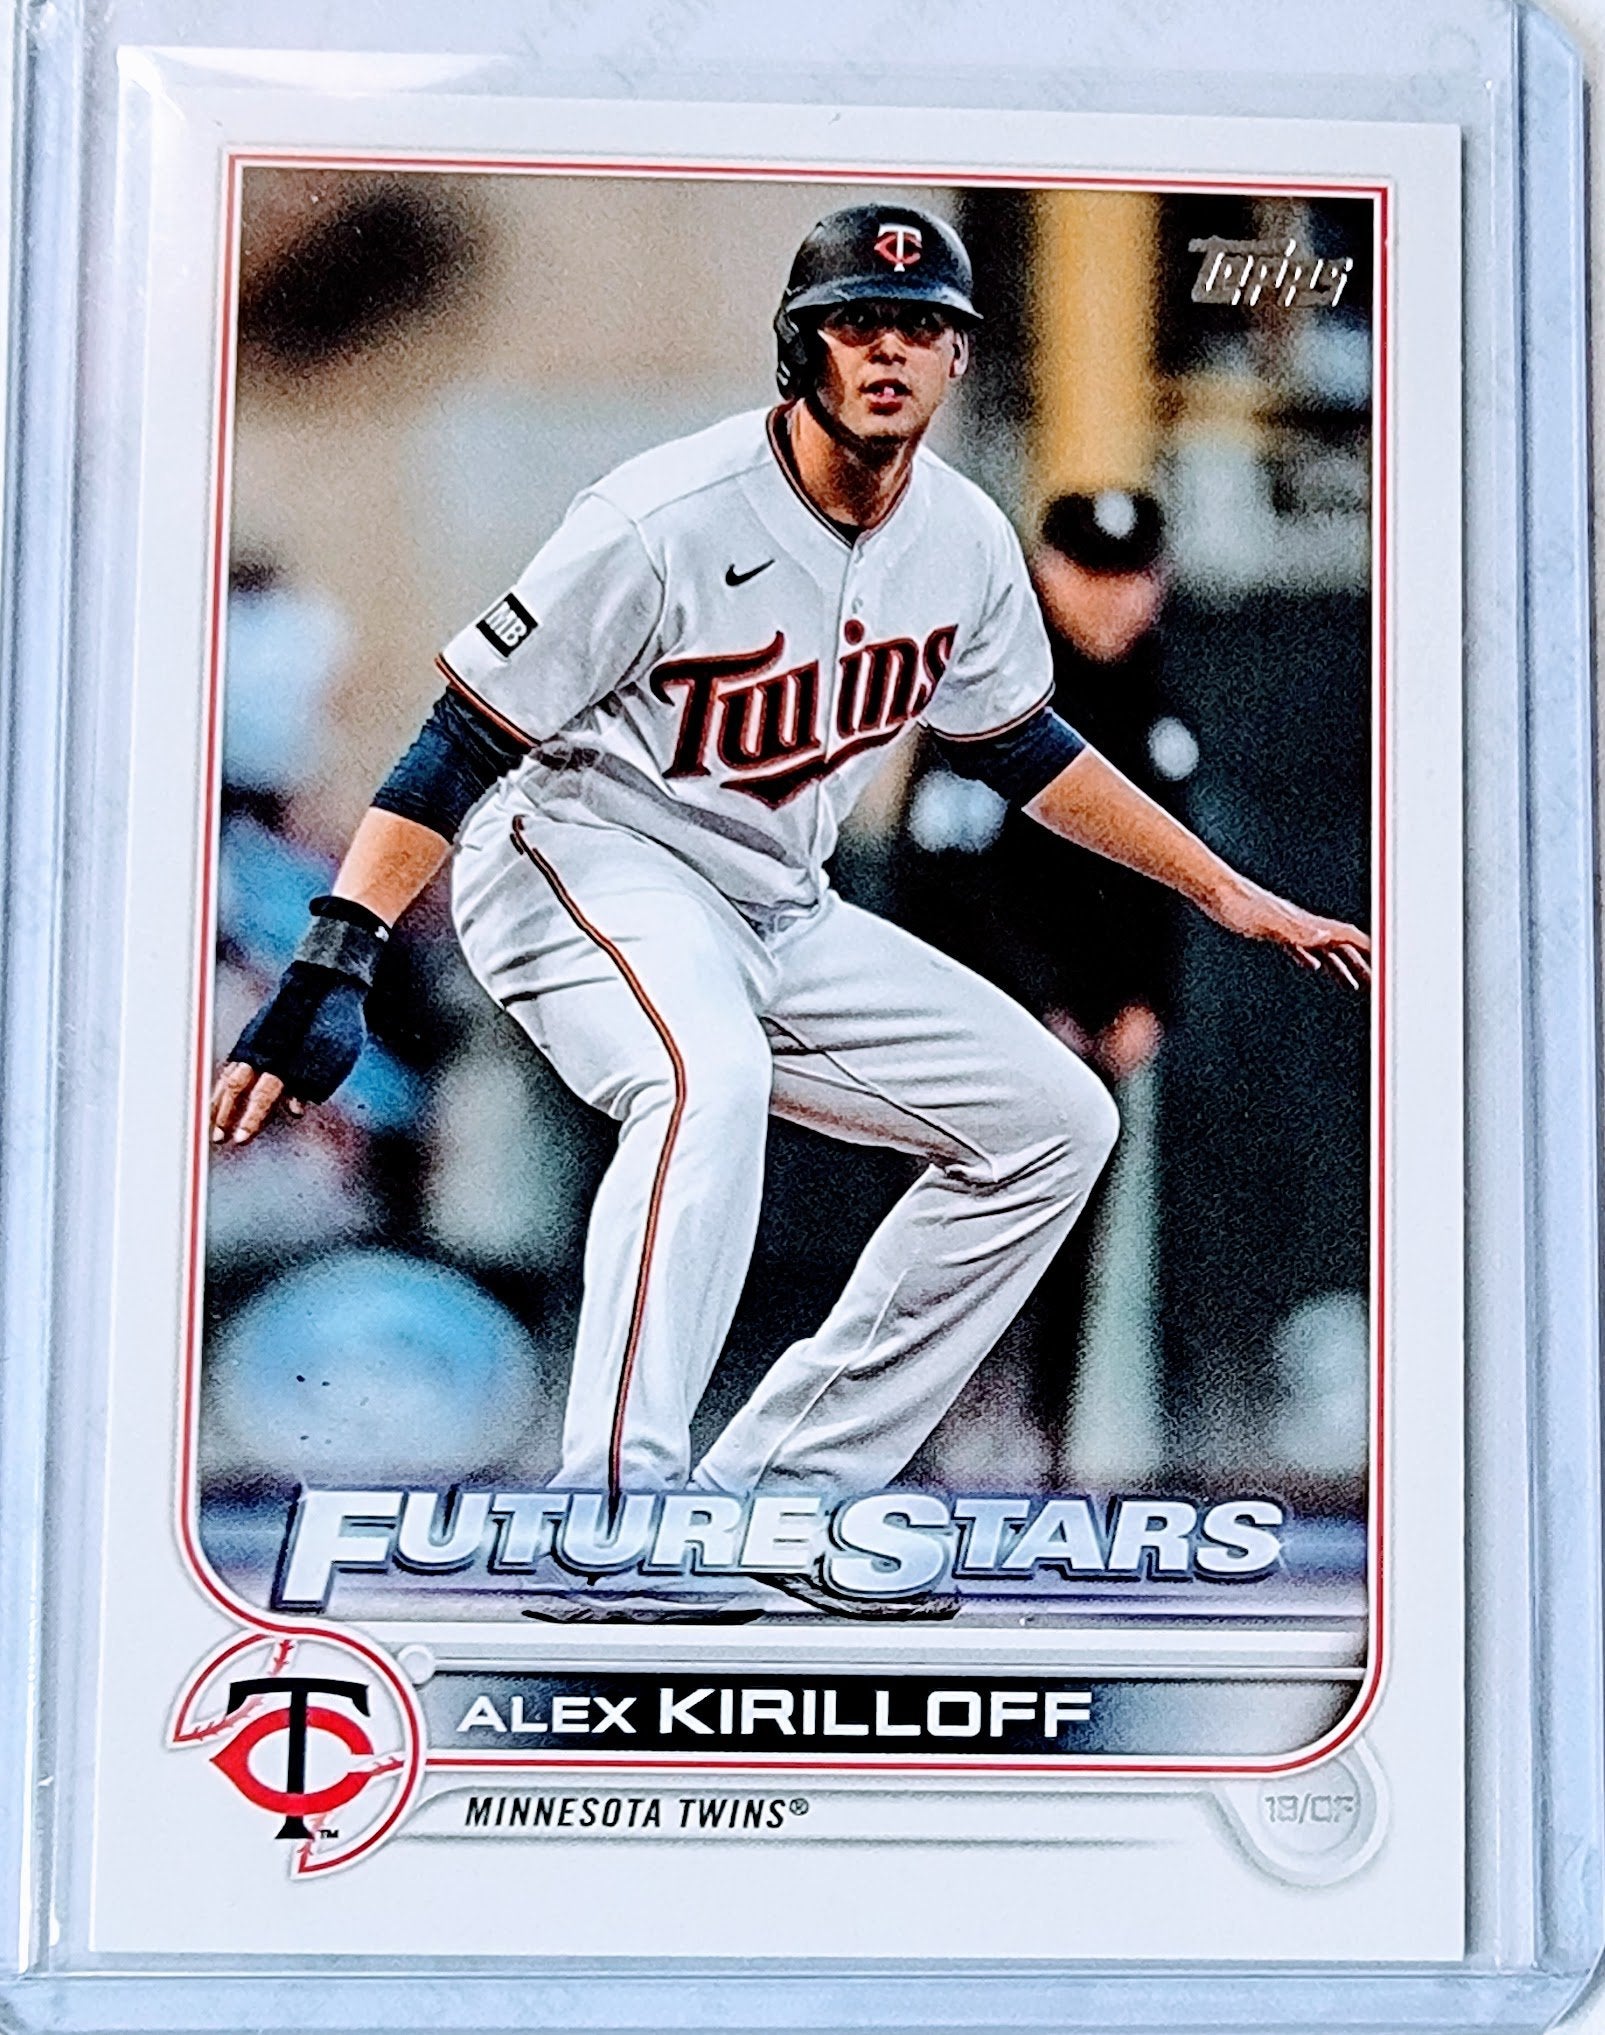 2022 Topps Alex Kirilloff Future Stars Baseball Trading Card GRB1 simple Xclusive Collectibles   